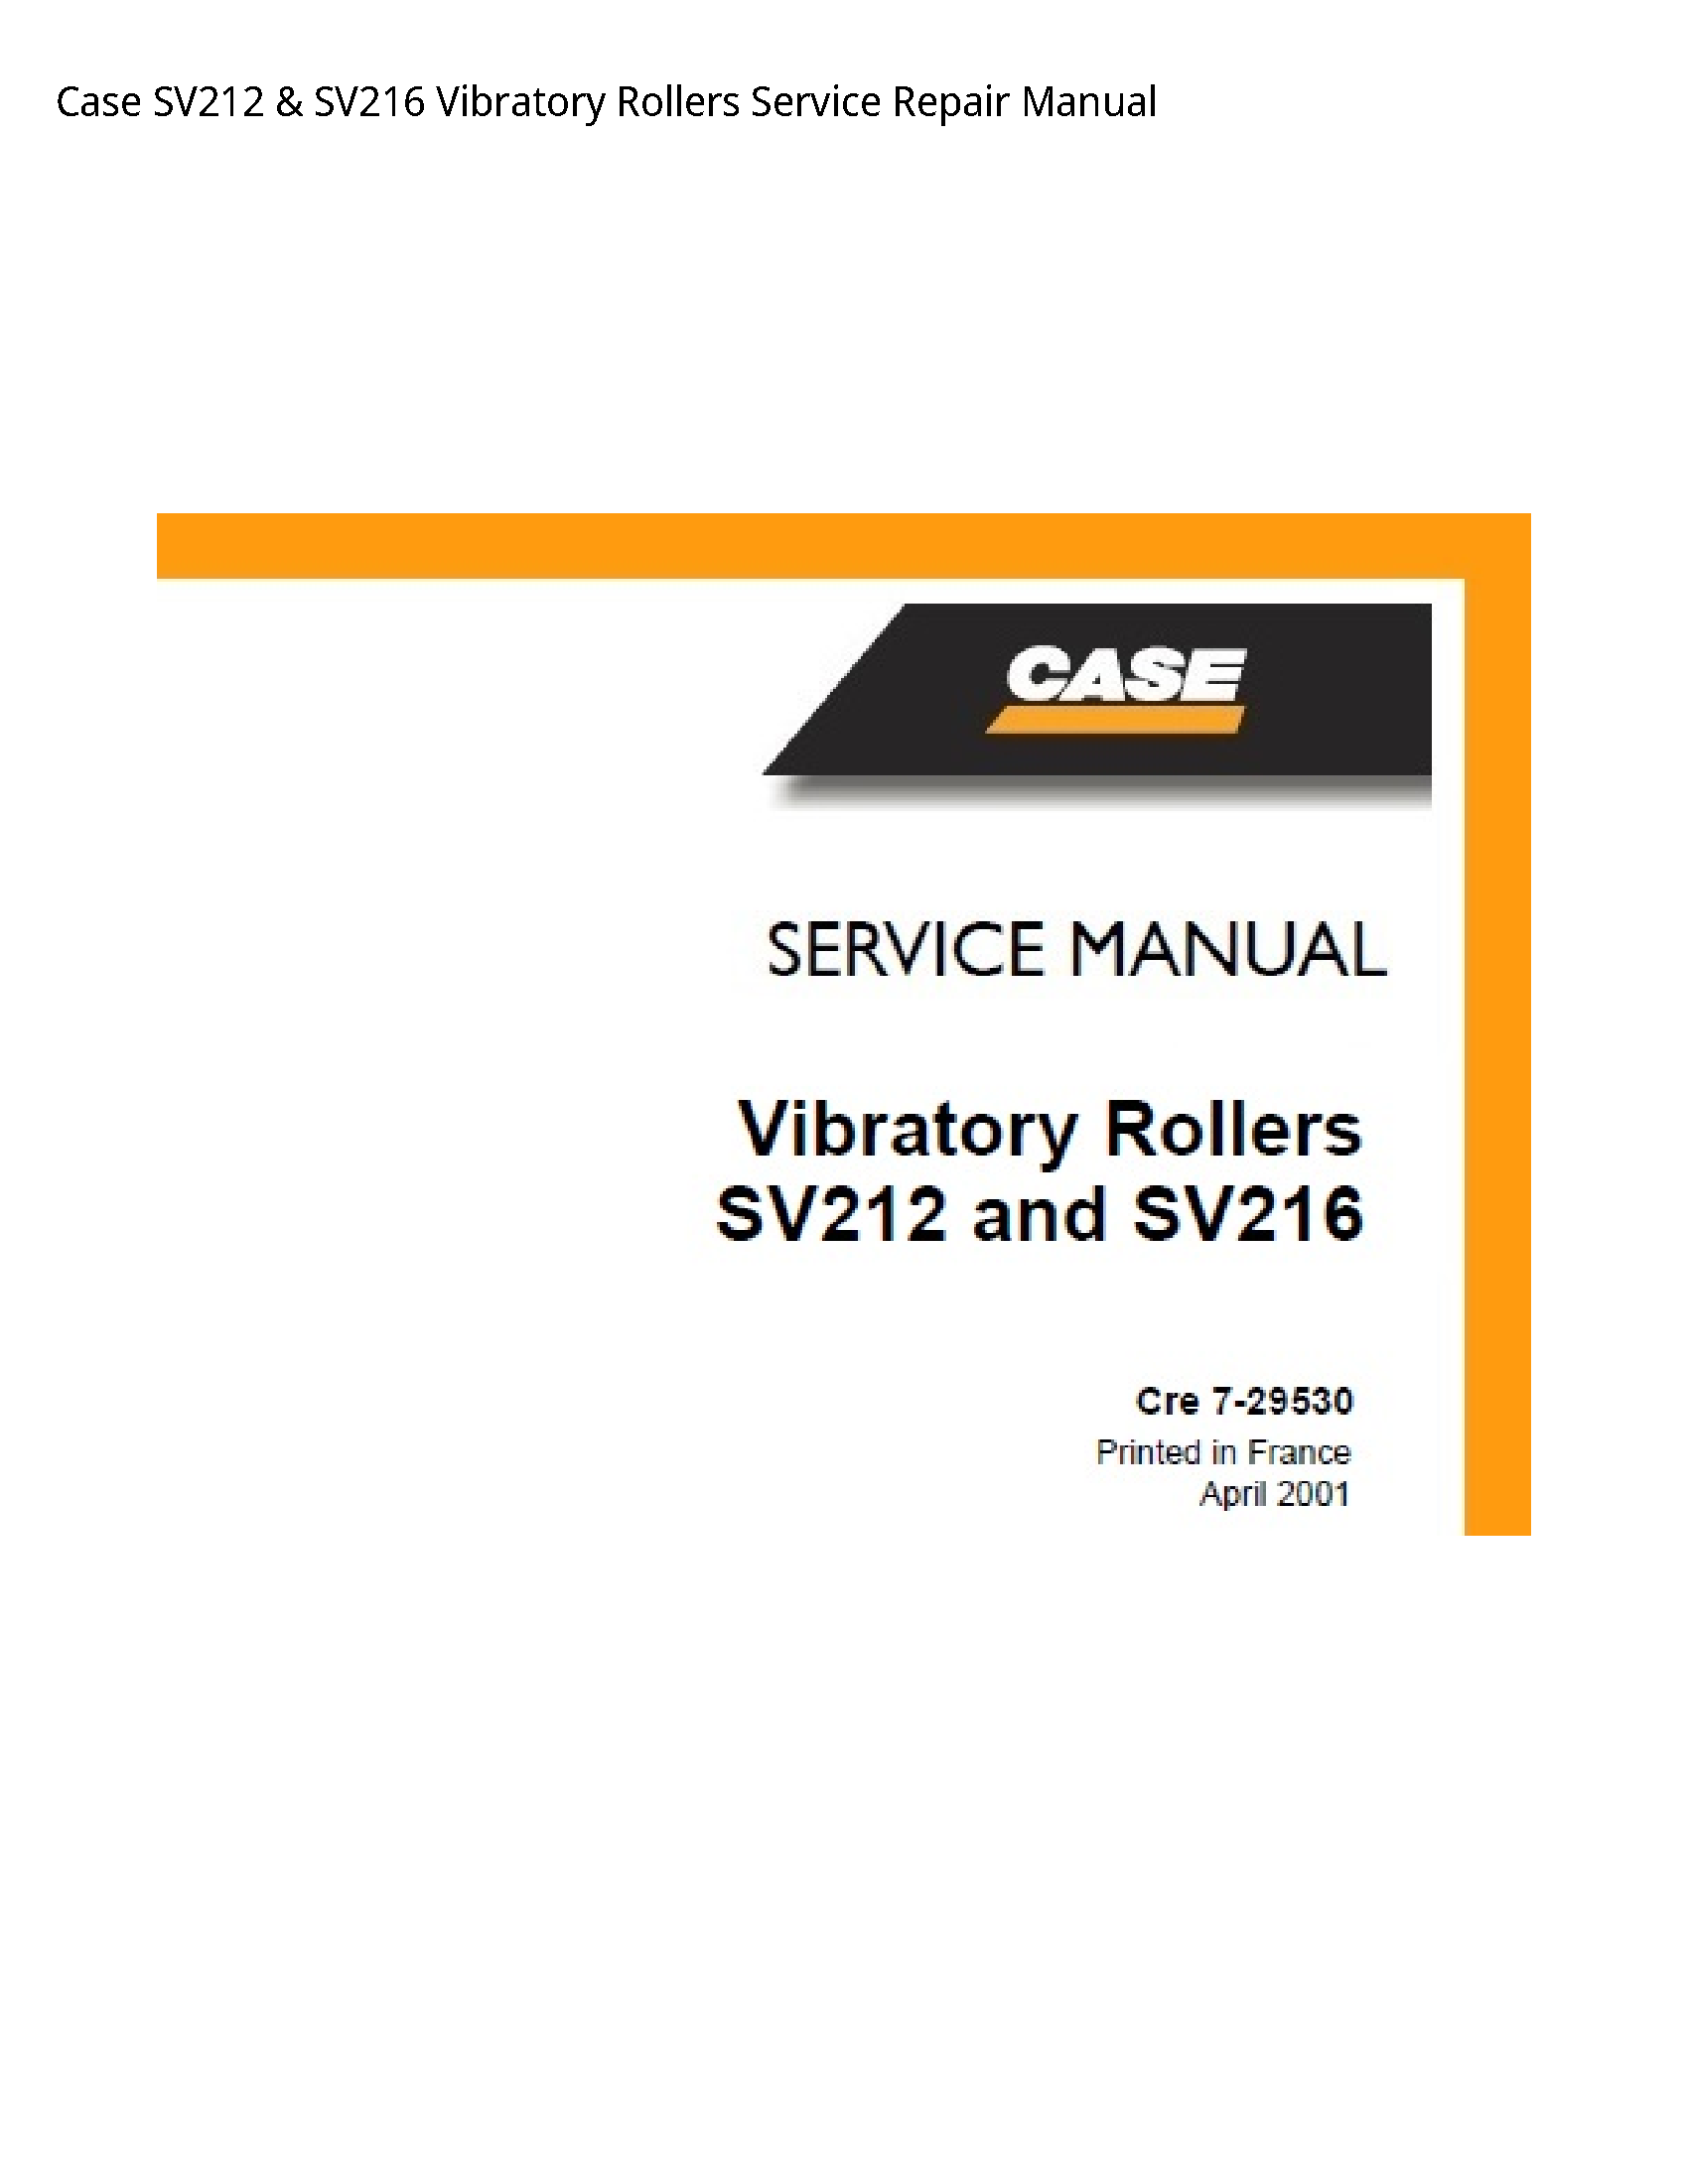 Case/Case IH SV212 Vibratory Rollers manual